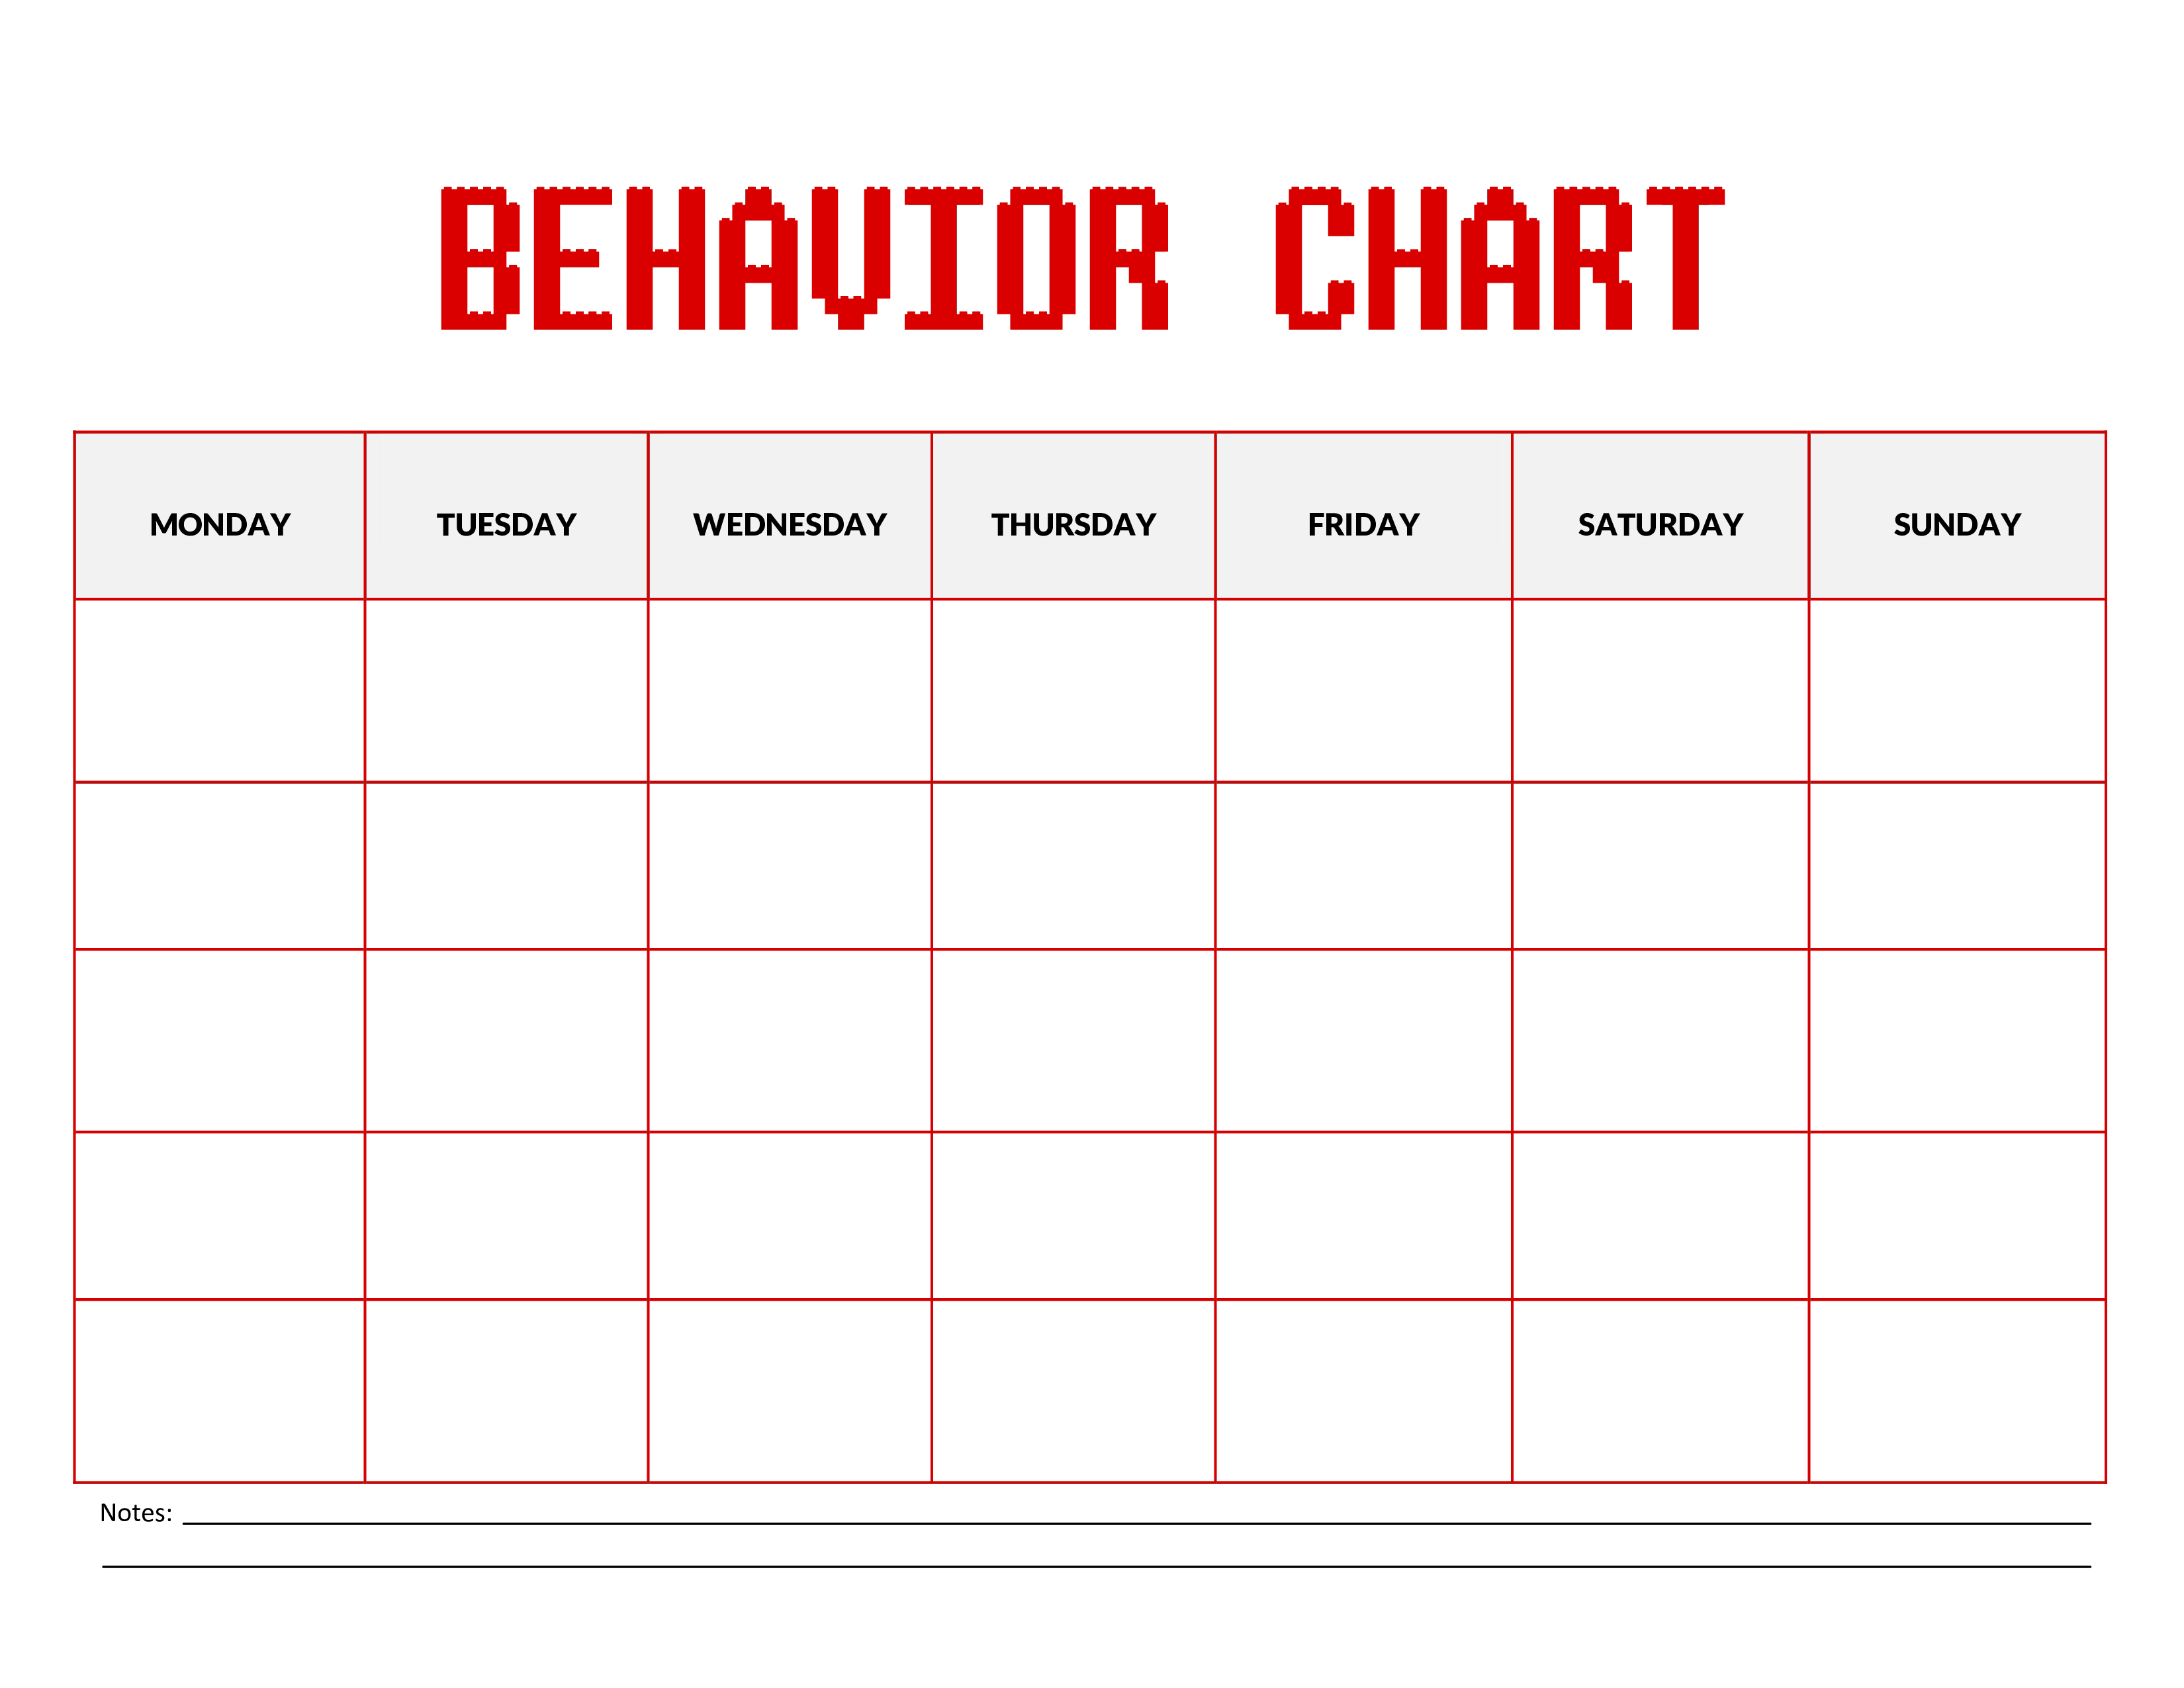 Lego Behavior Chart | Templates at allbusinesstemplates.com